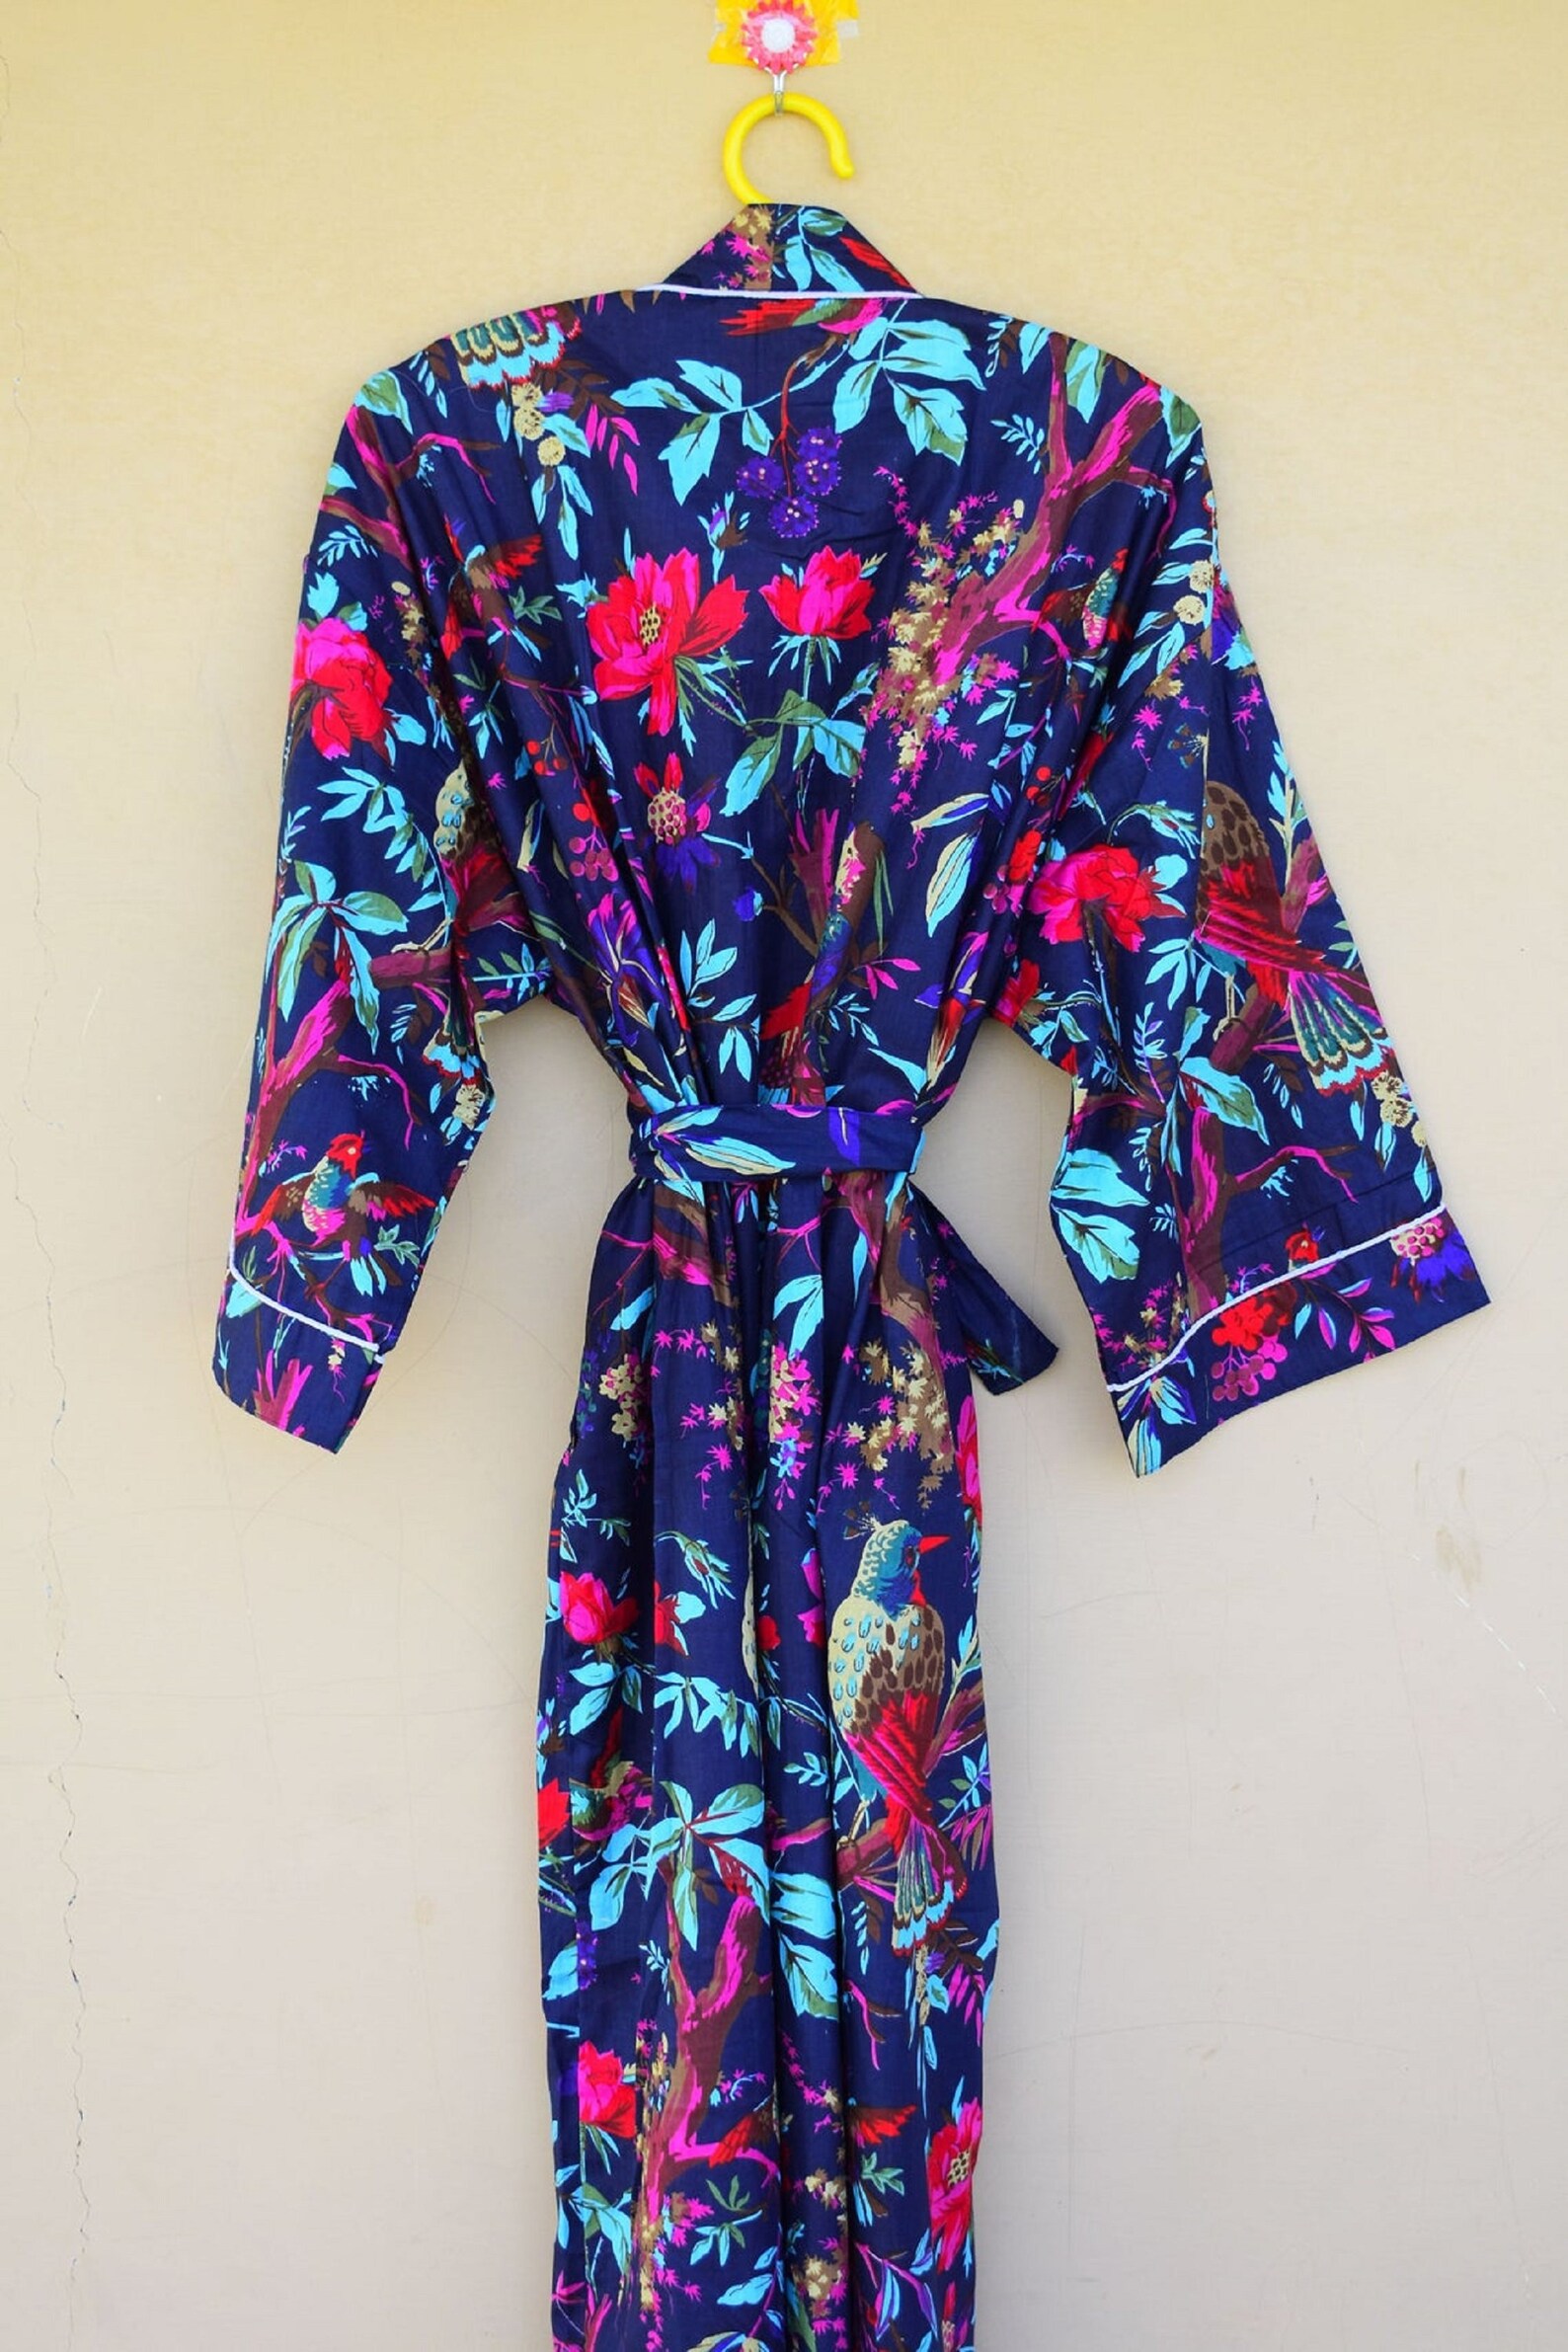 Cotton Unisex robe Handmade Bird print Cover up Bath Robes/ | Etsy